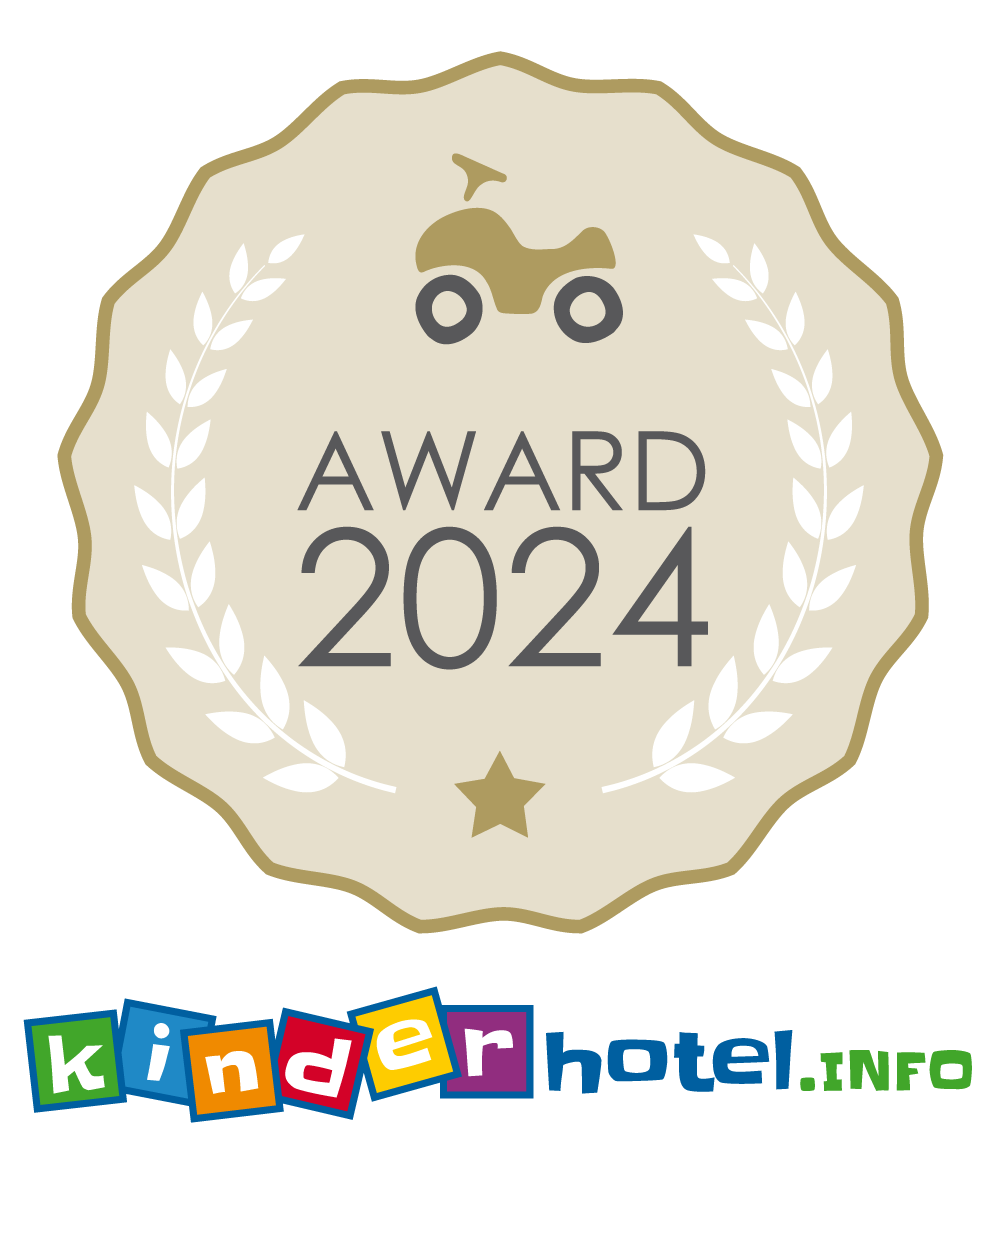 kinderhotel.info Award